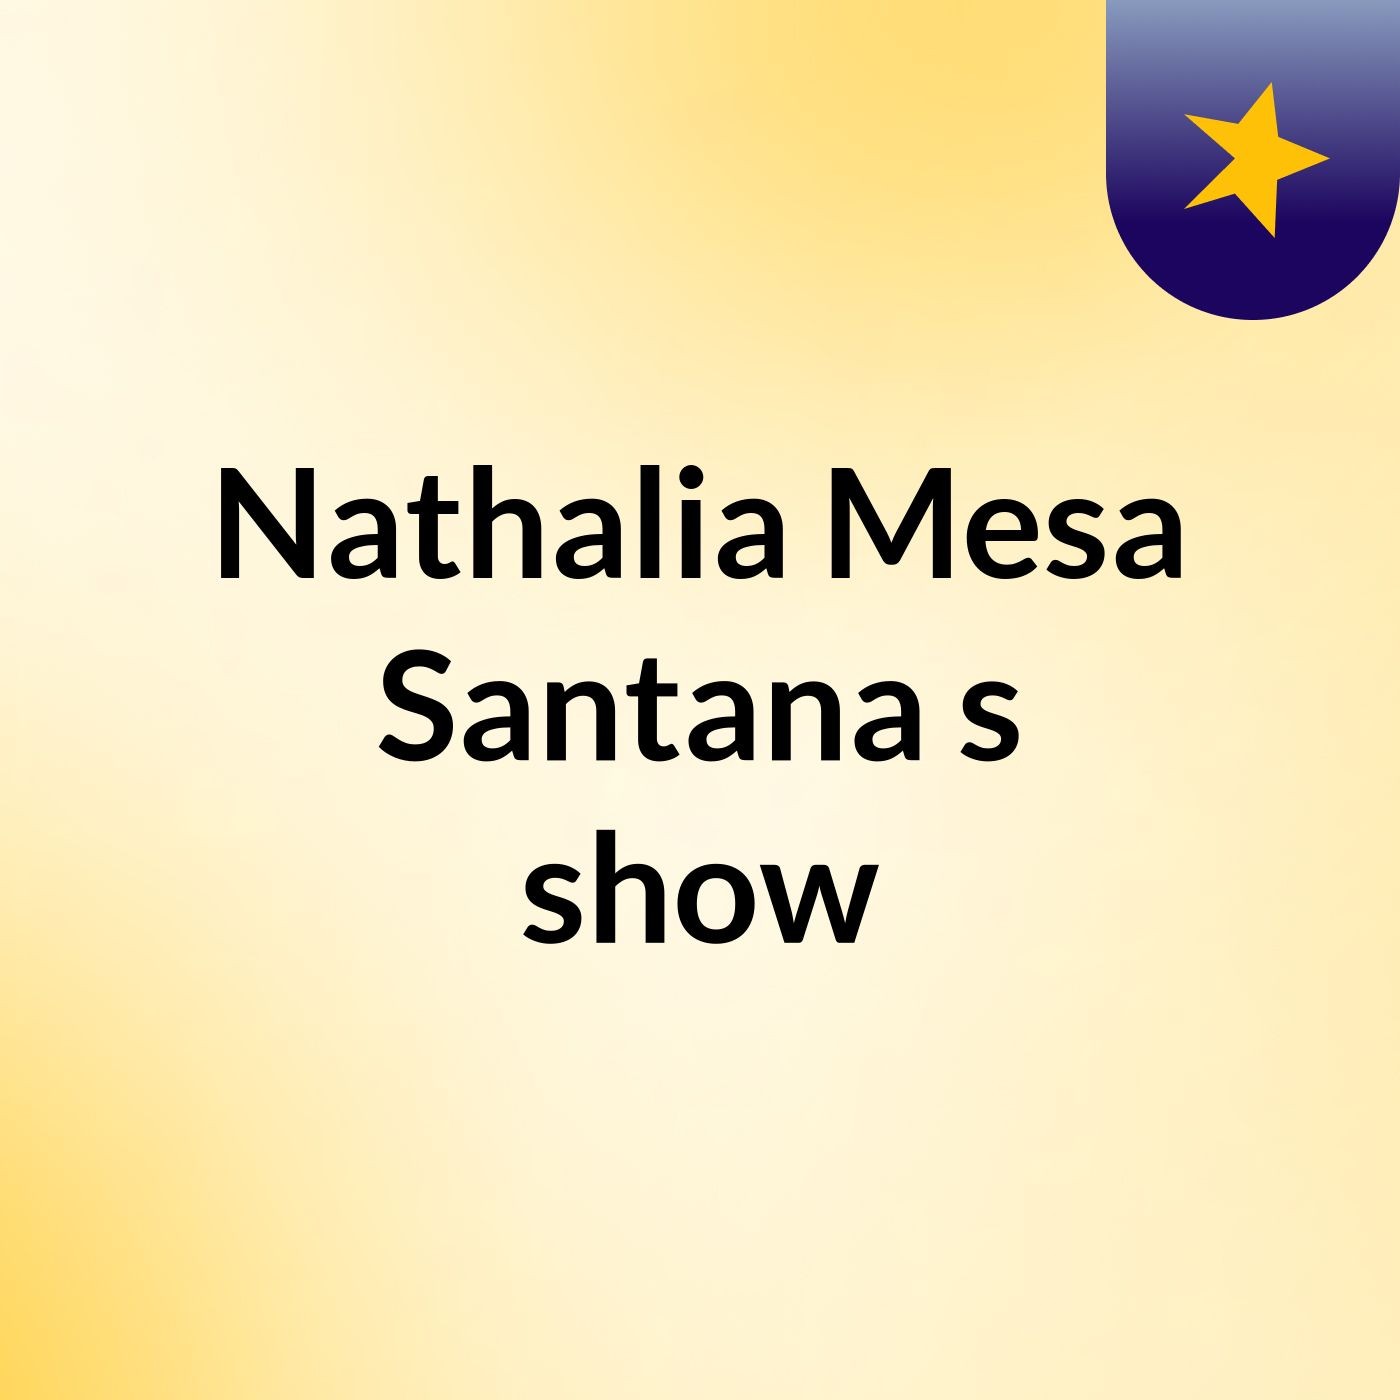 Nathalia Mesa Santana's show